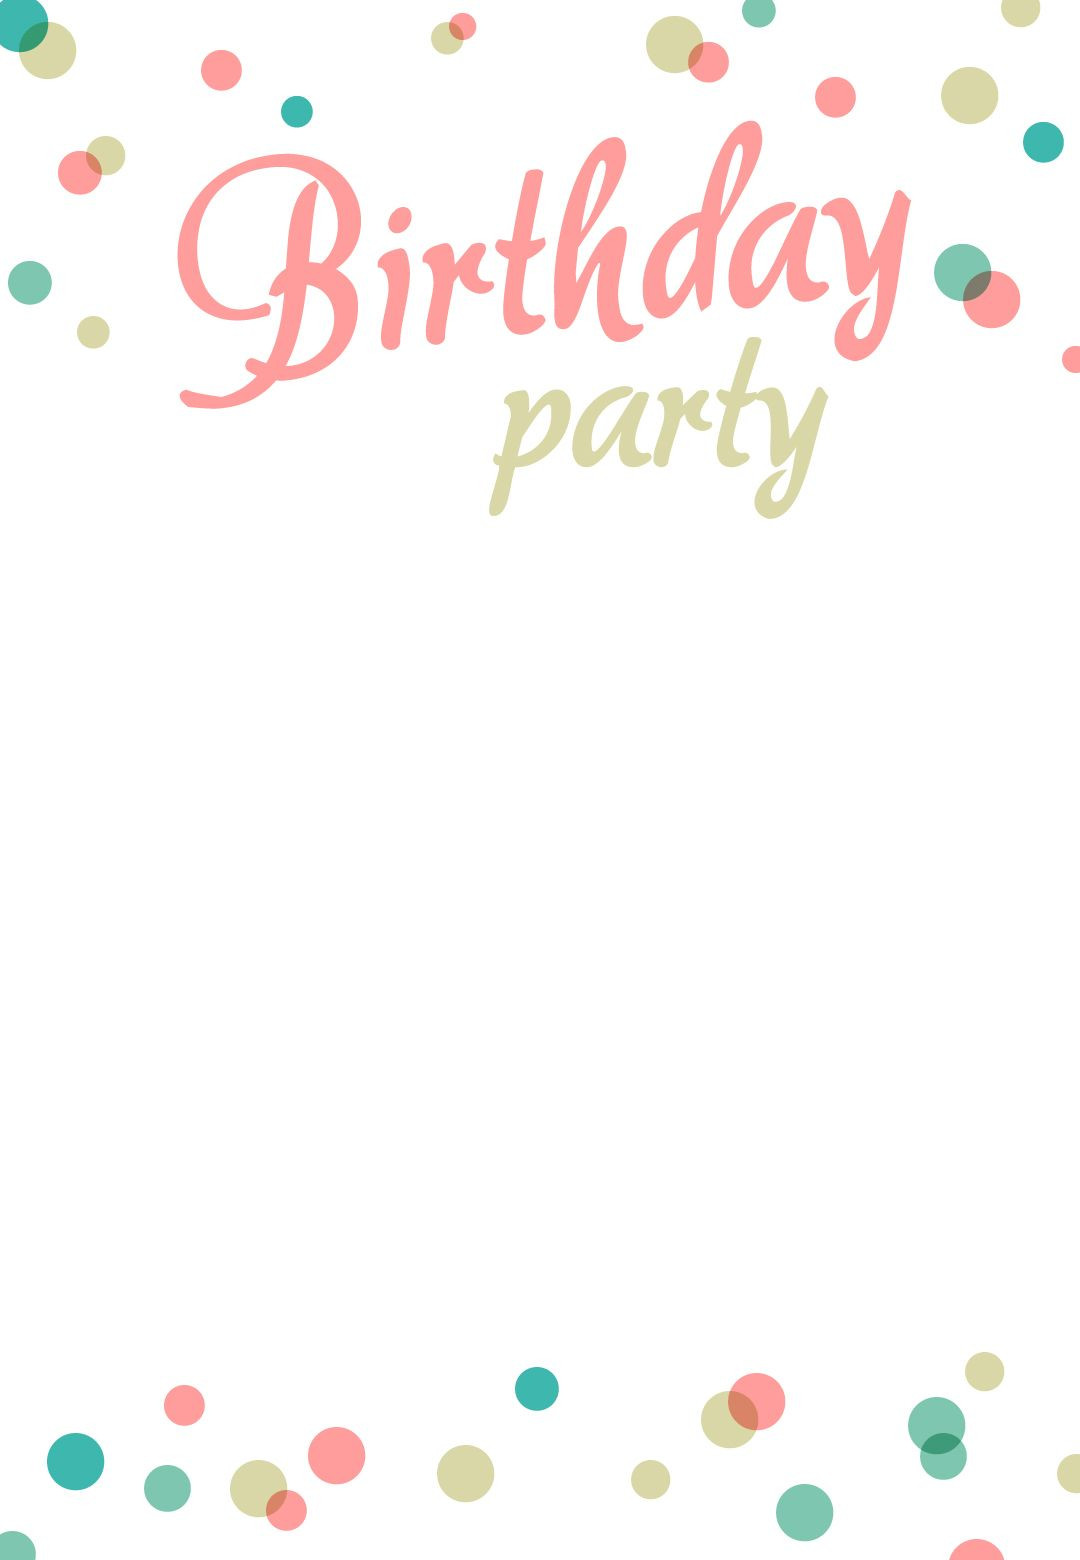 Free Online Birthday Party Invitations
 Birthday Party Invitation Free Printable